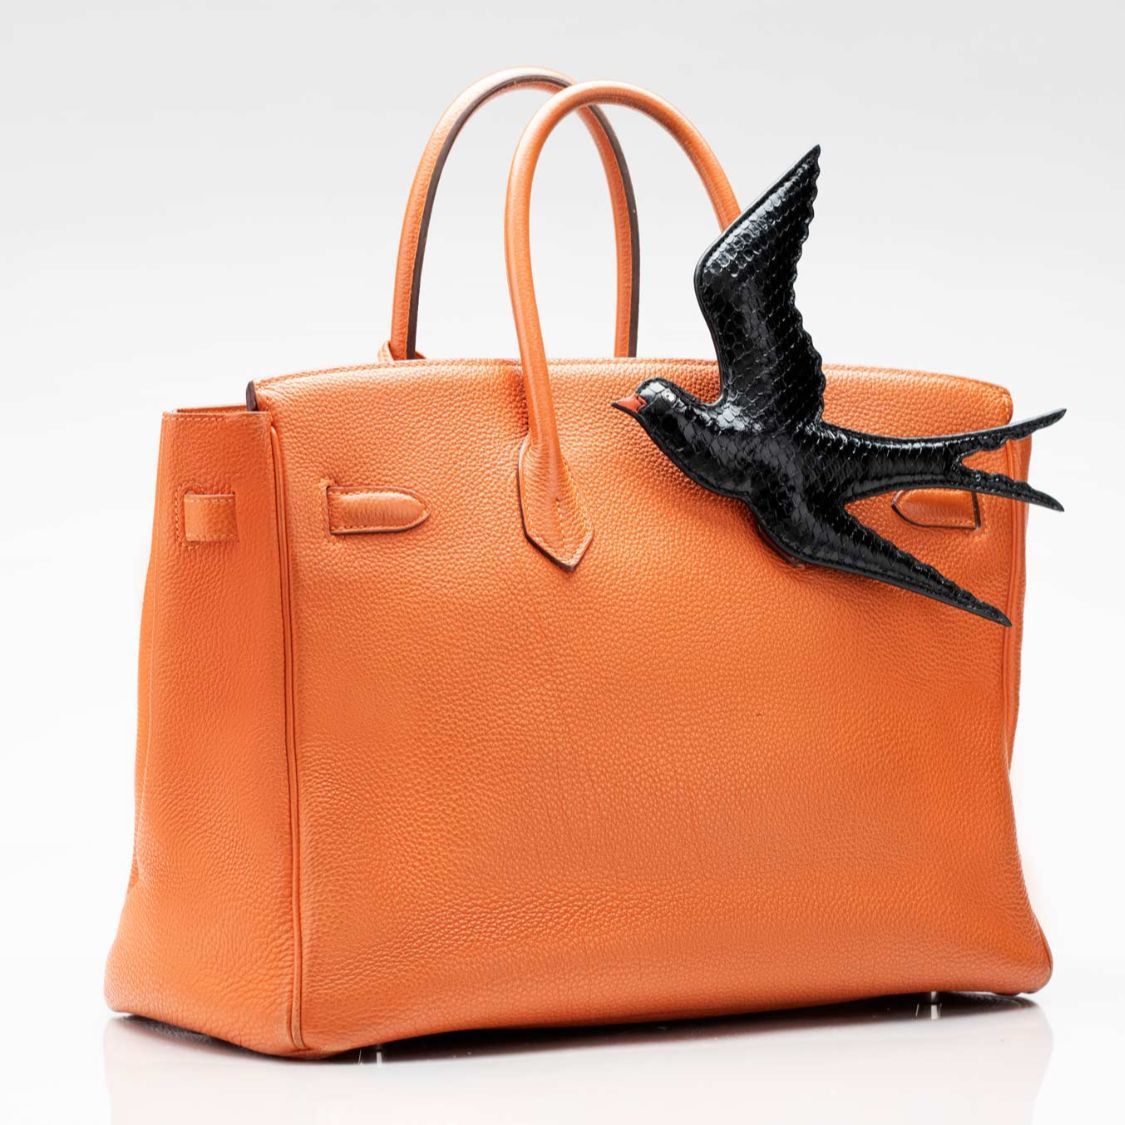 Handbag accessories- black bird